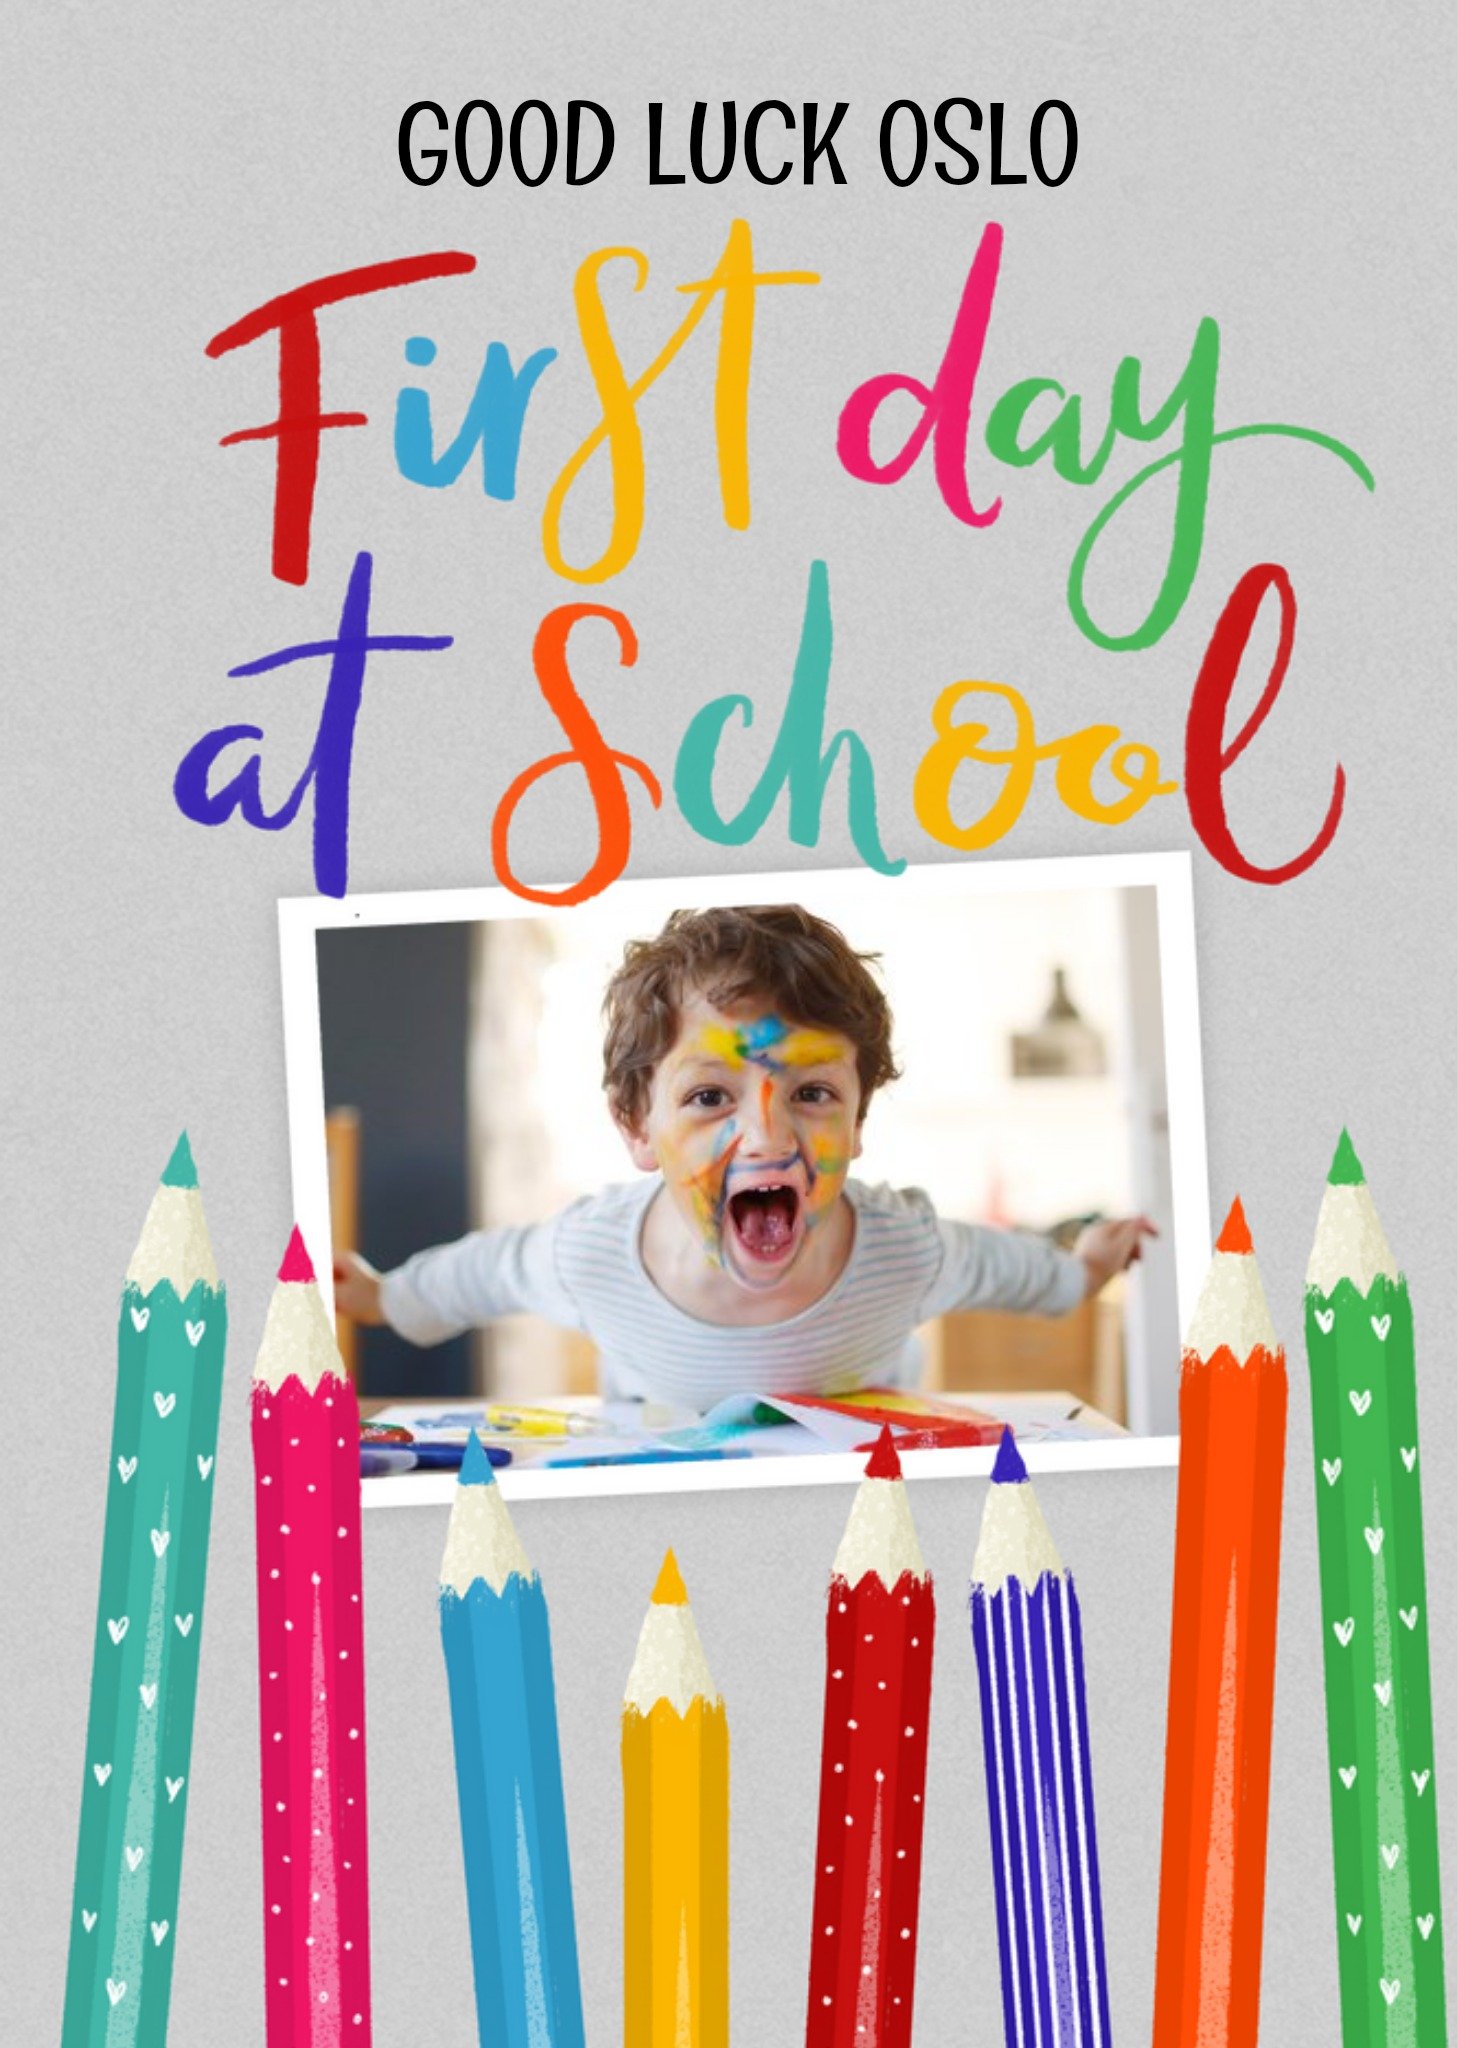 Moonpig Okey Dokey Design Illustrated First Day At School Card Ecard